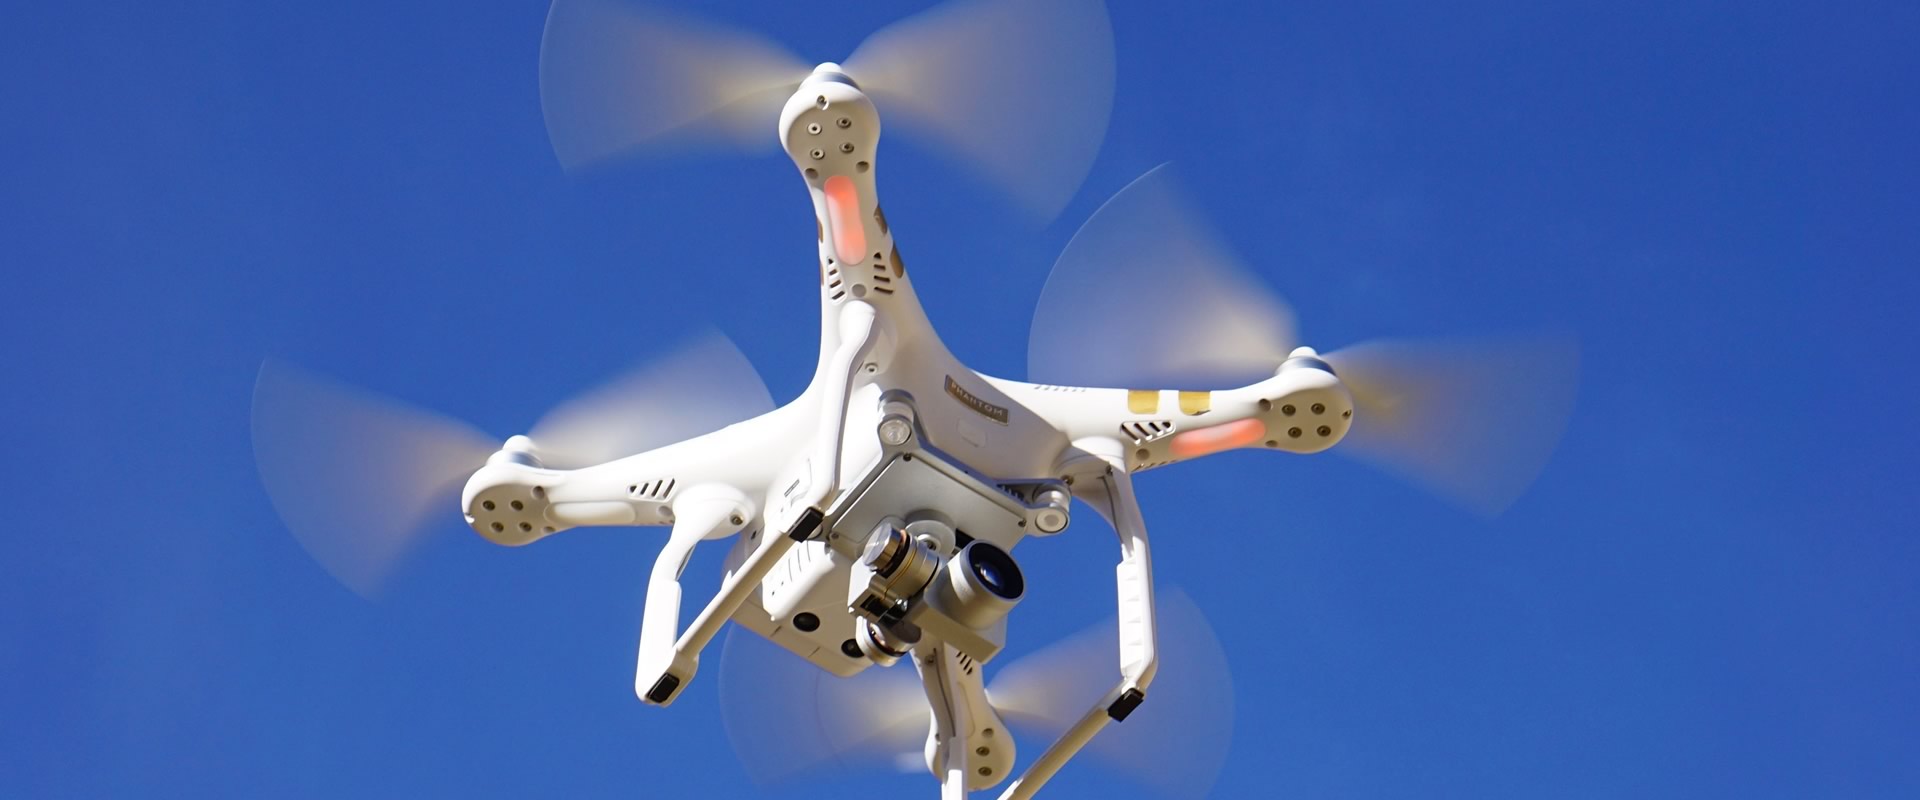 uas drone definition